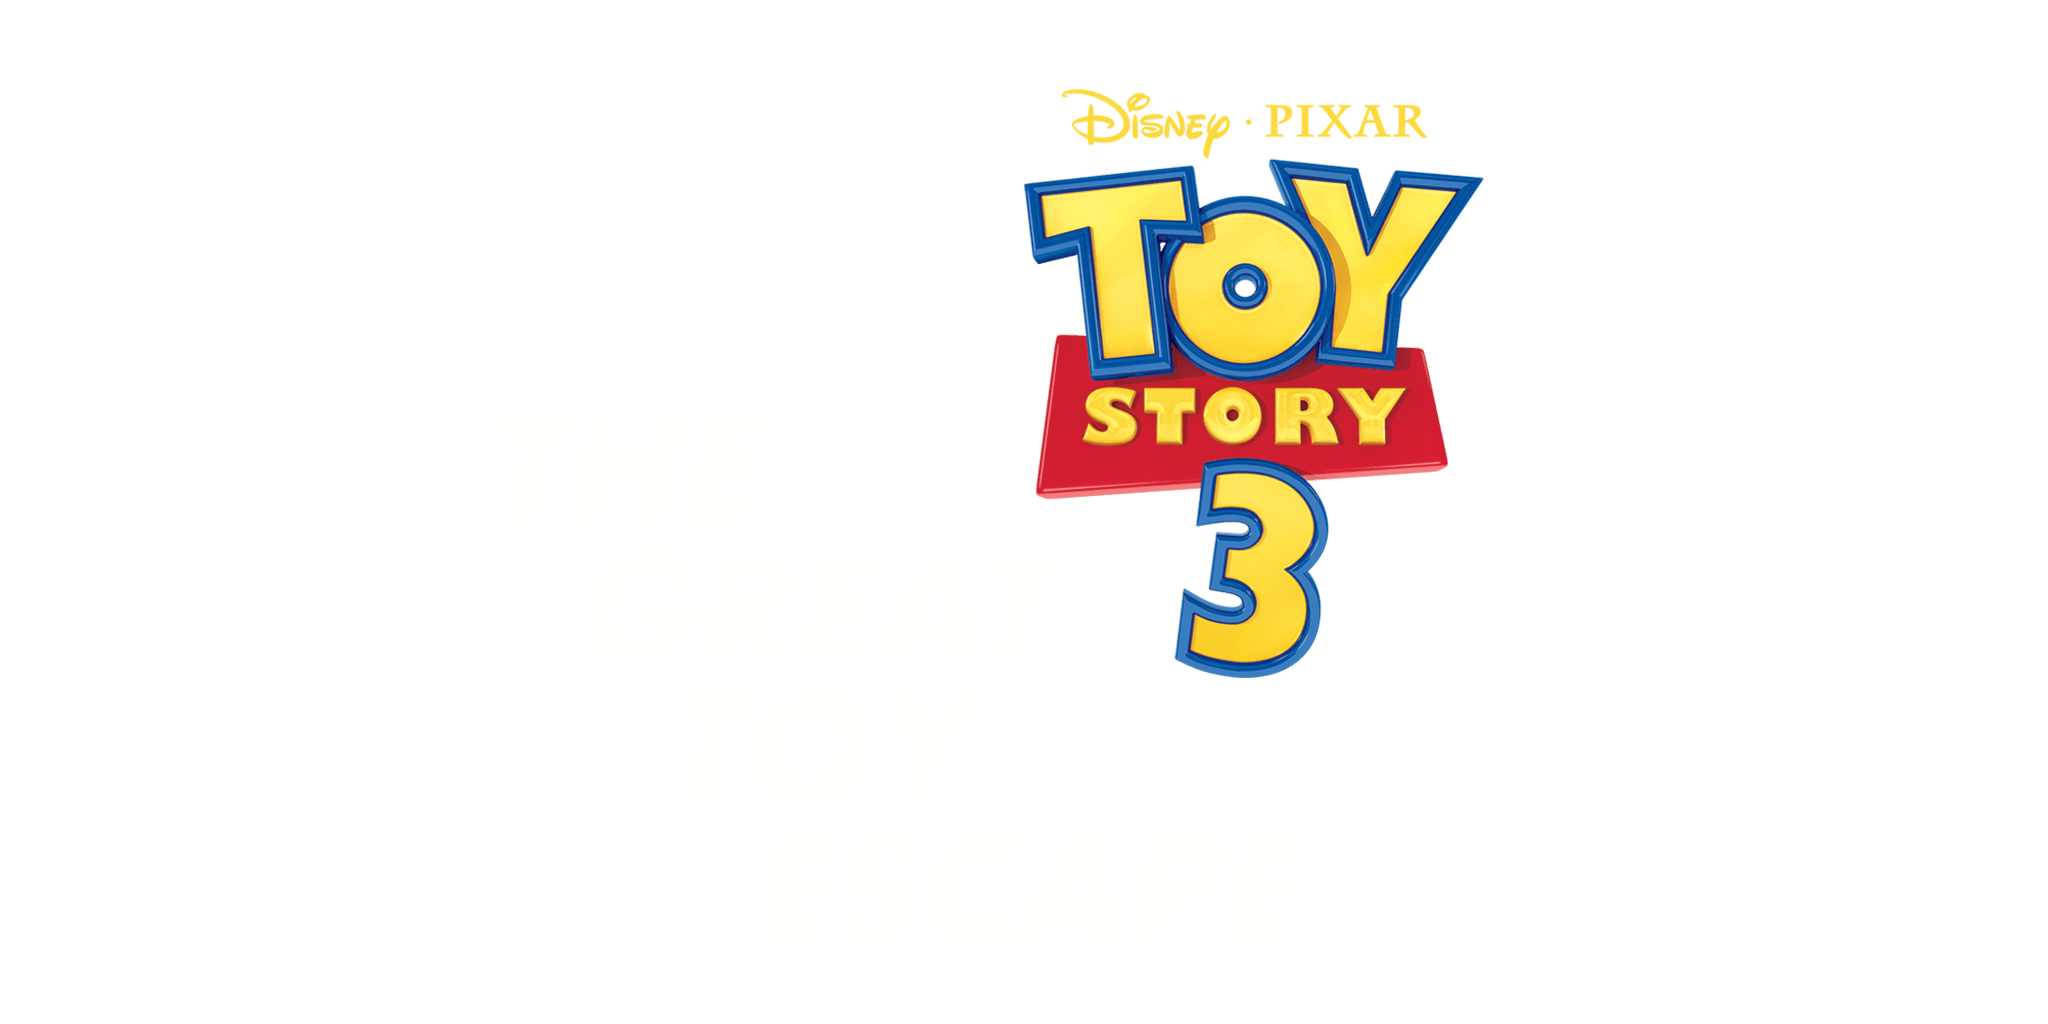 toy story 3 logos